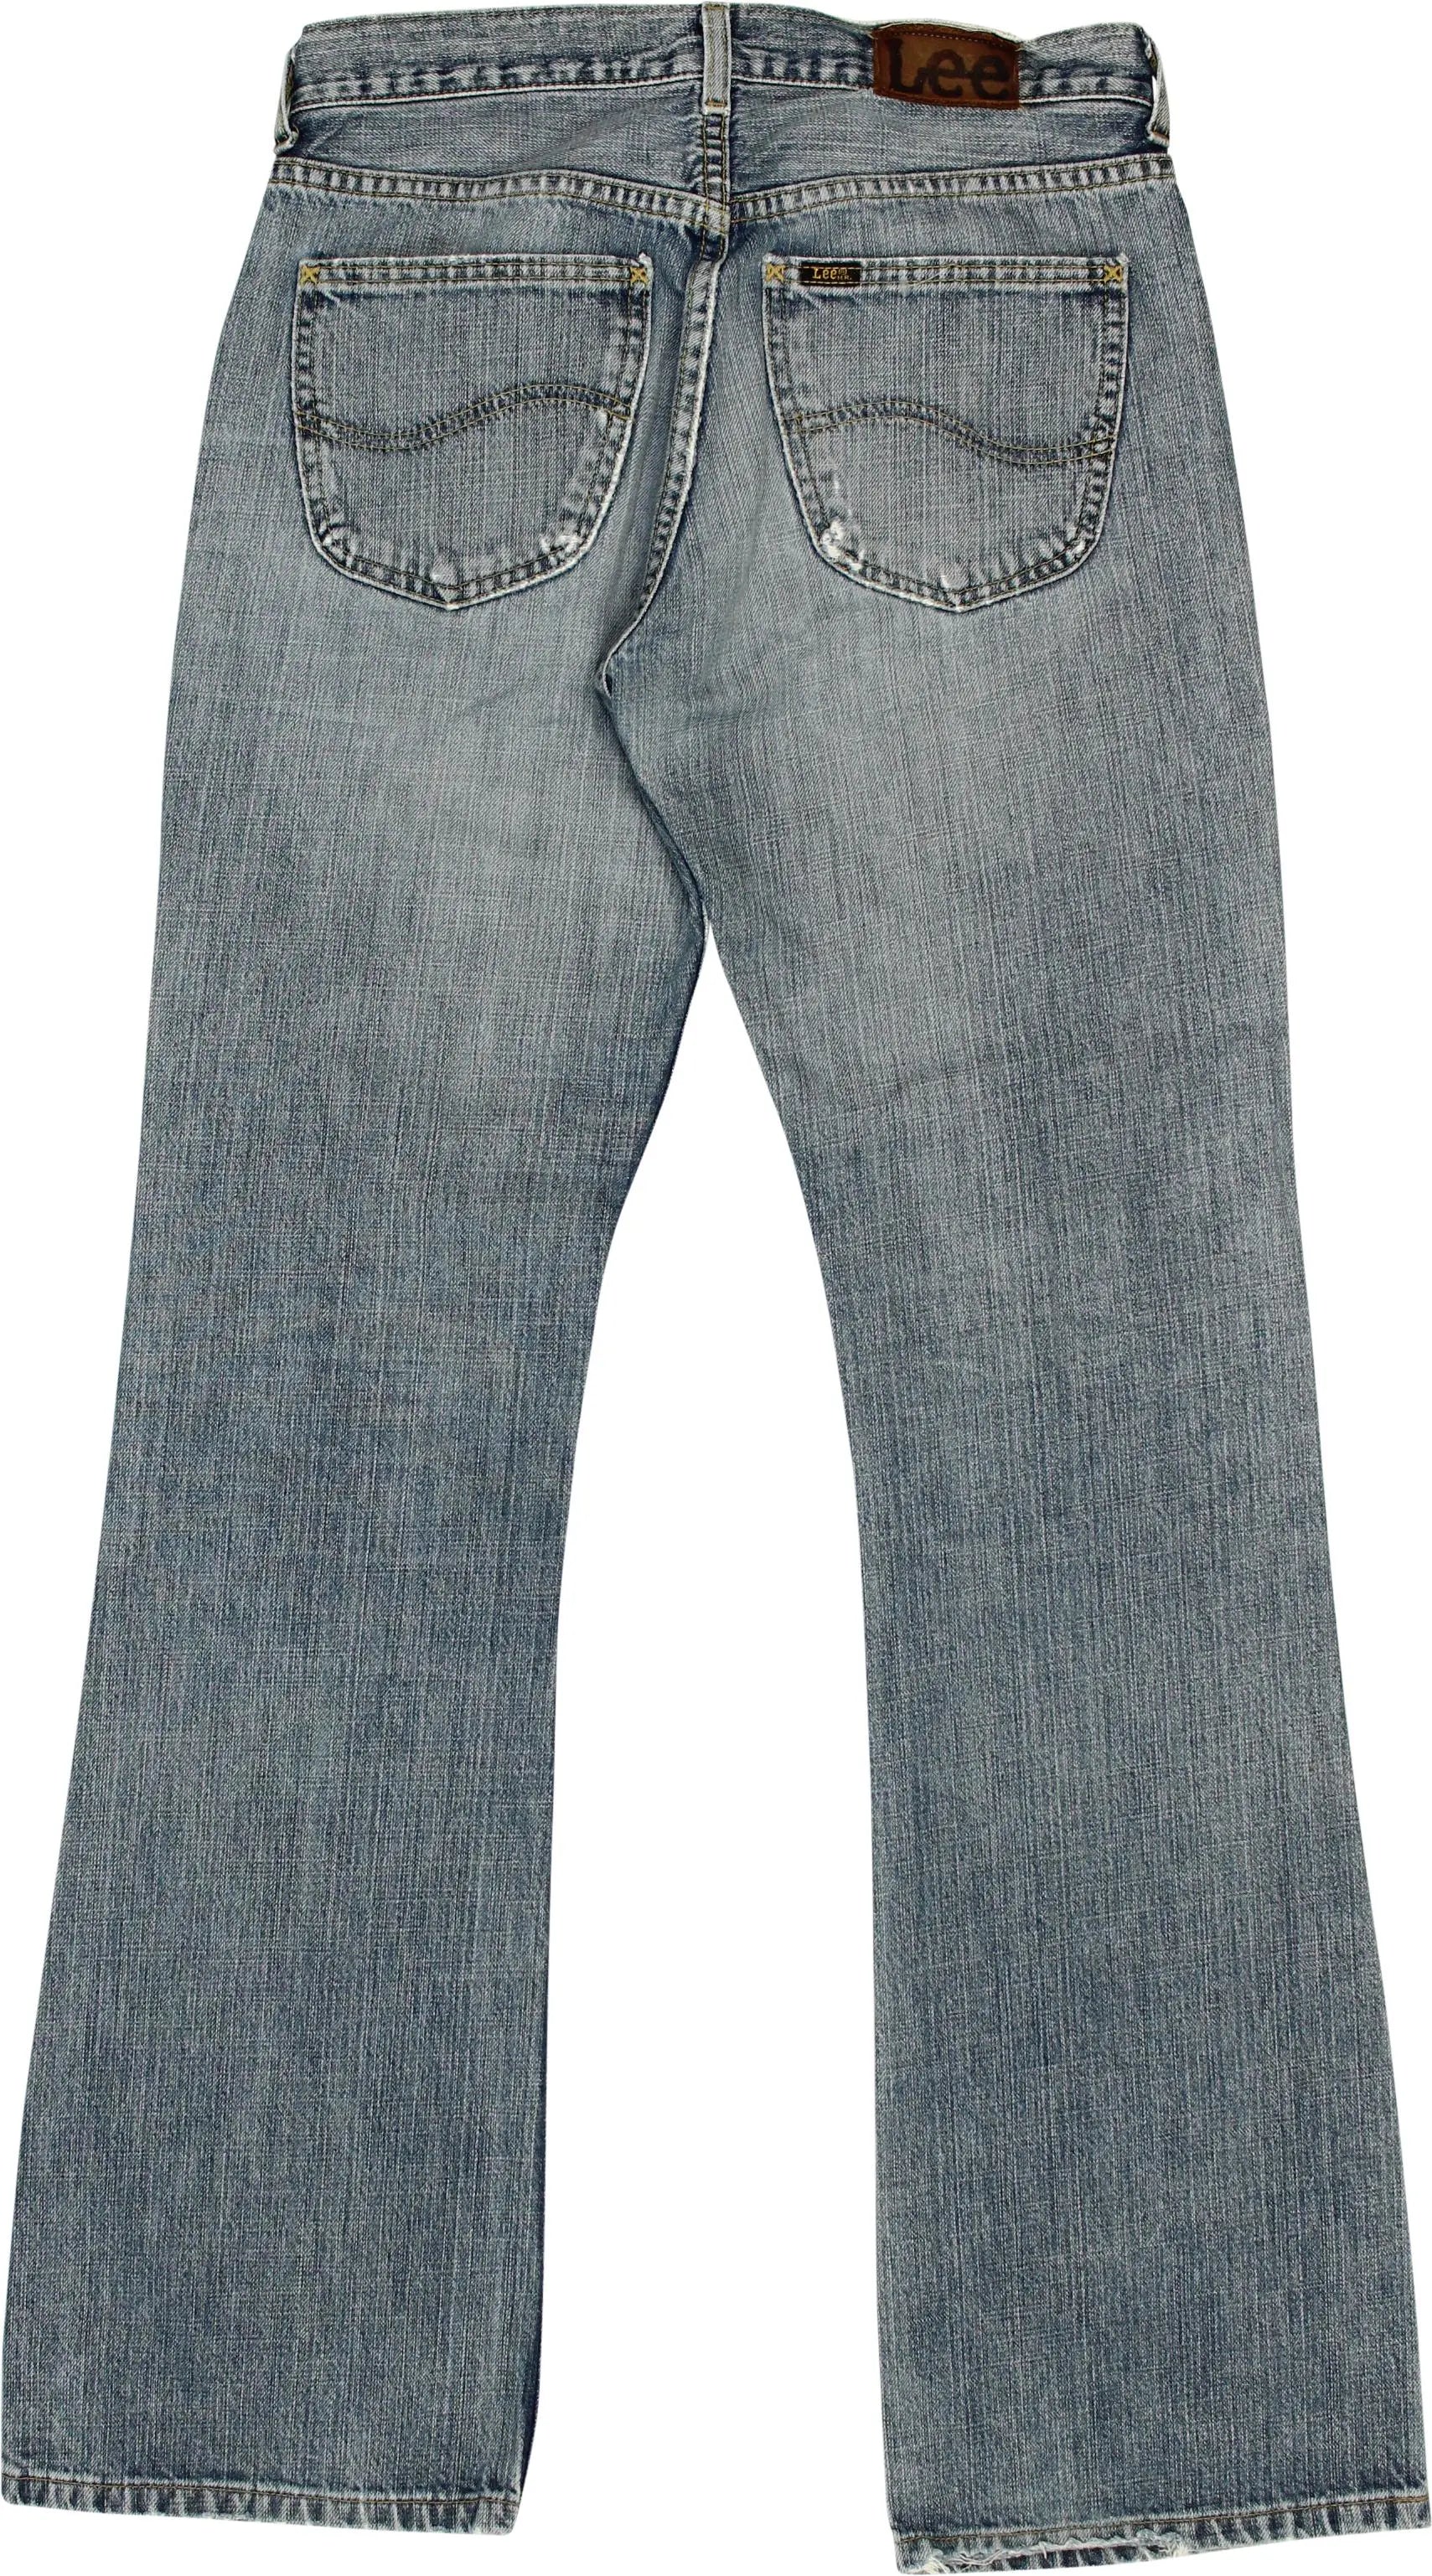 Lee - Lee Denver Bootcut Jeans- ThriftTale.com - Vintage and second handclothing